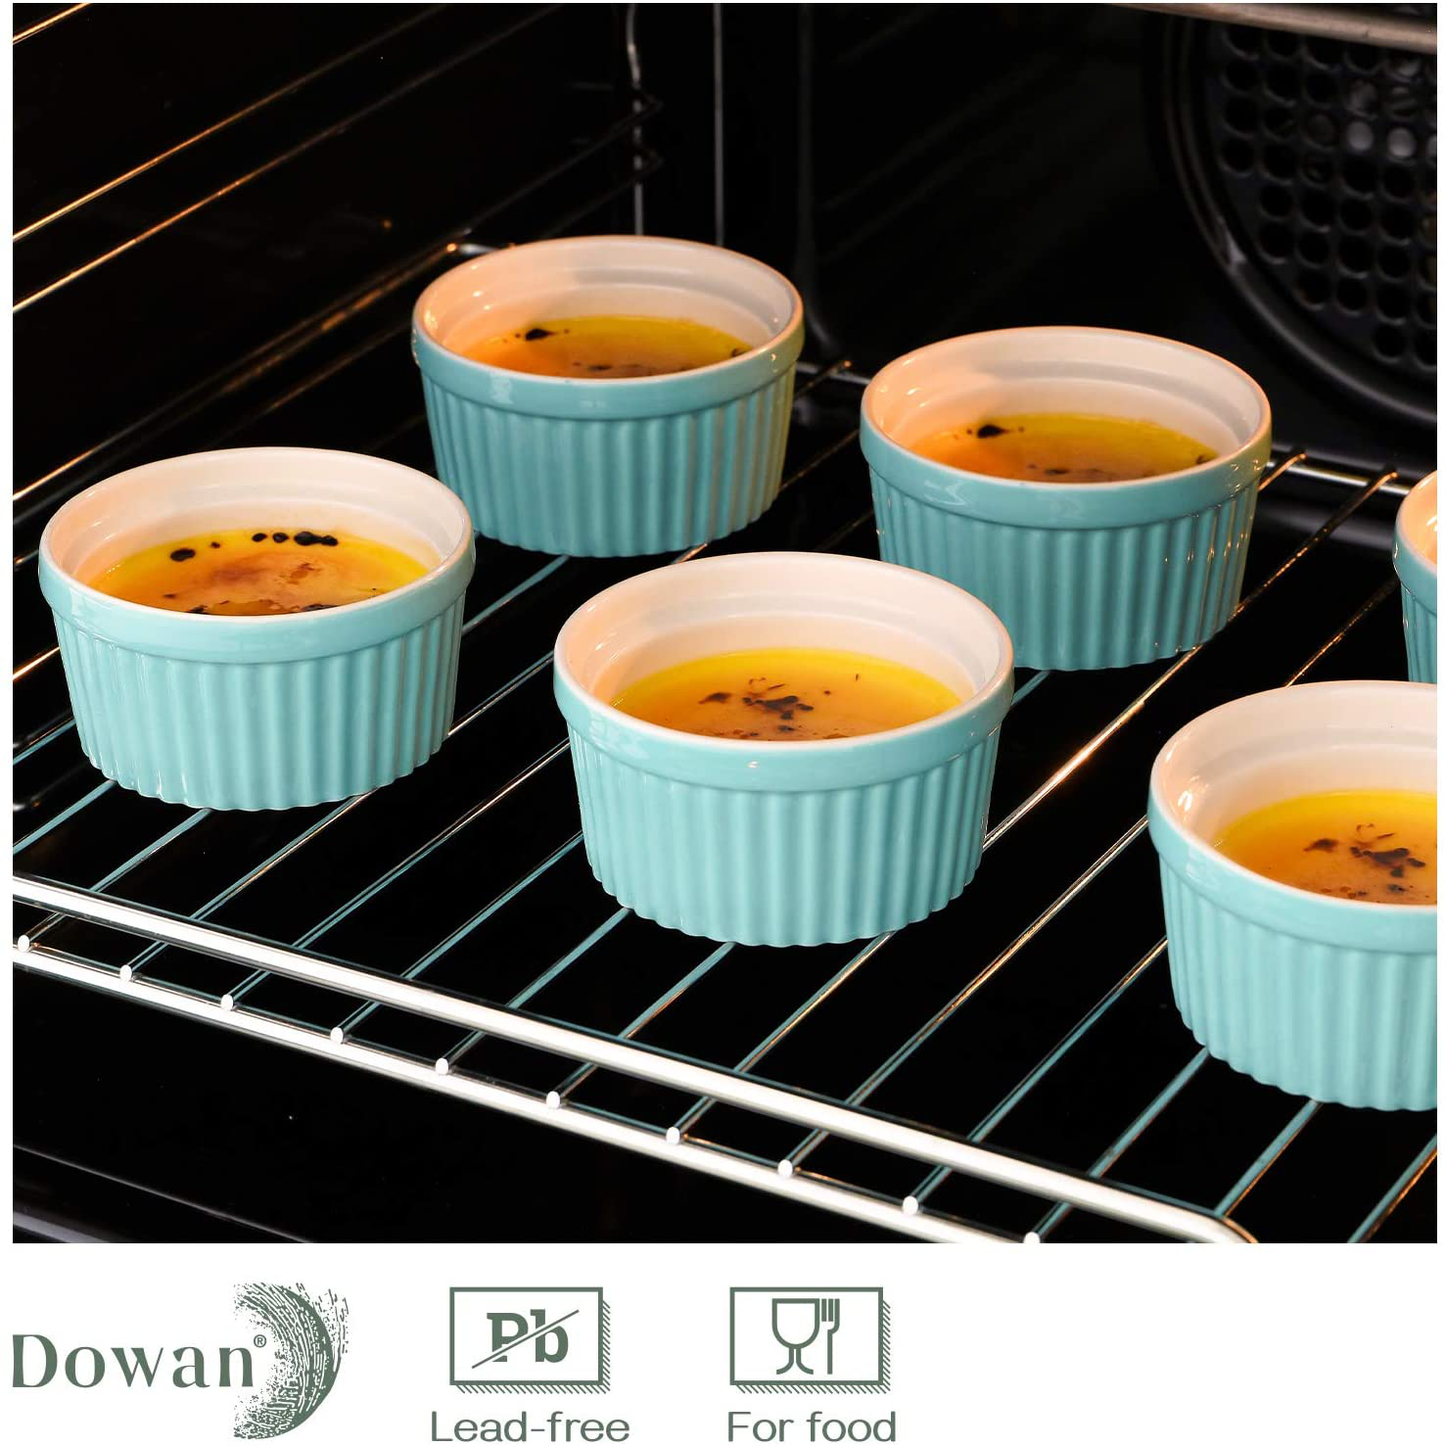 DOWAN 4 oz Ramekins - Ramekins for Creme Brulee Porcelain Ramekins Oven Safe, Classic Style Ramekins for Baking Souffle Ramekins Bowls, Set of 6, White